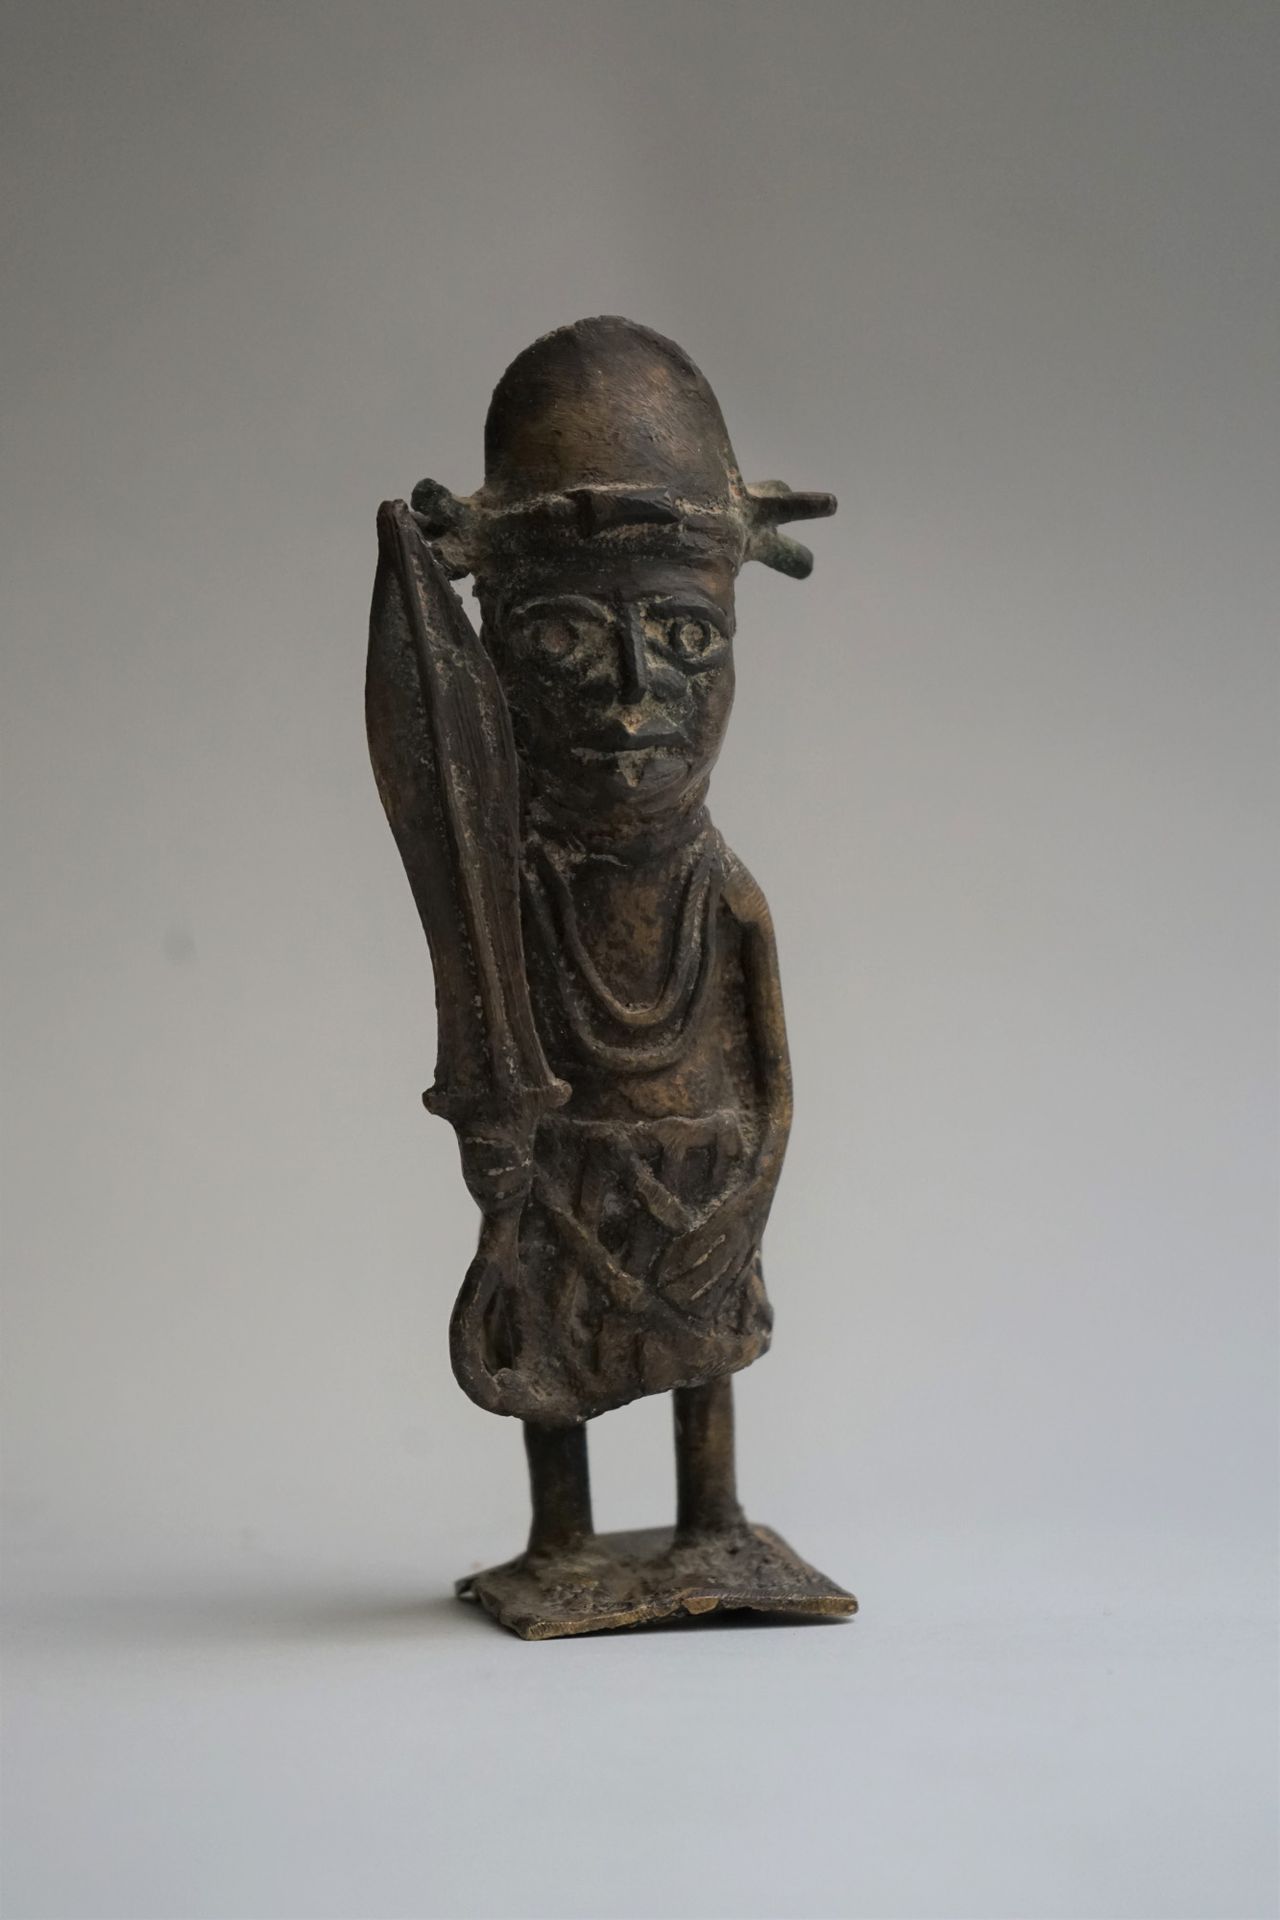 Null 雕像展示了一个手持剑、头戴头盔的士兵。青铜，带有棕色的铜锈。

中部非洲。

高：16.5厘米